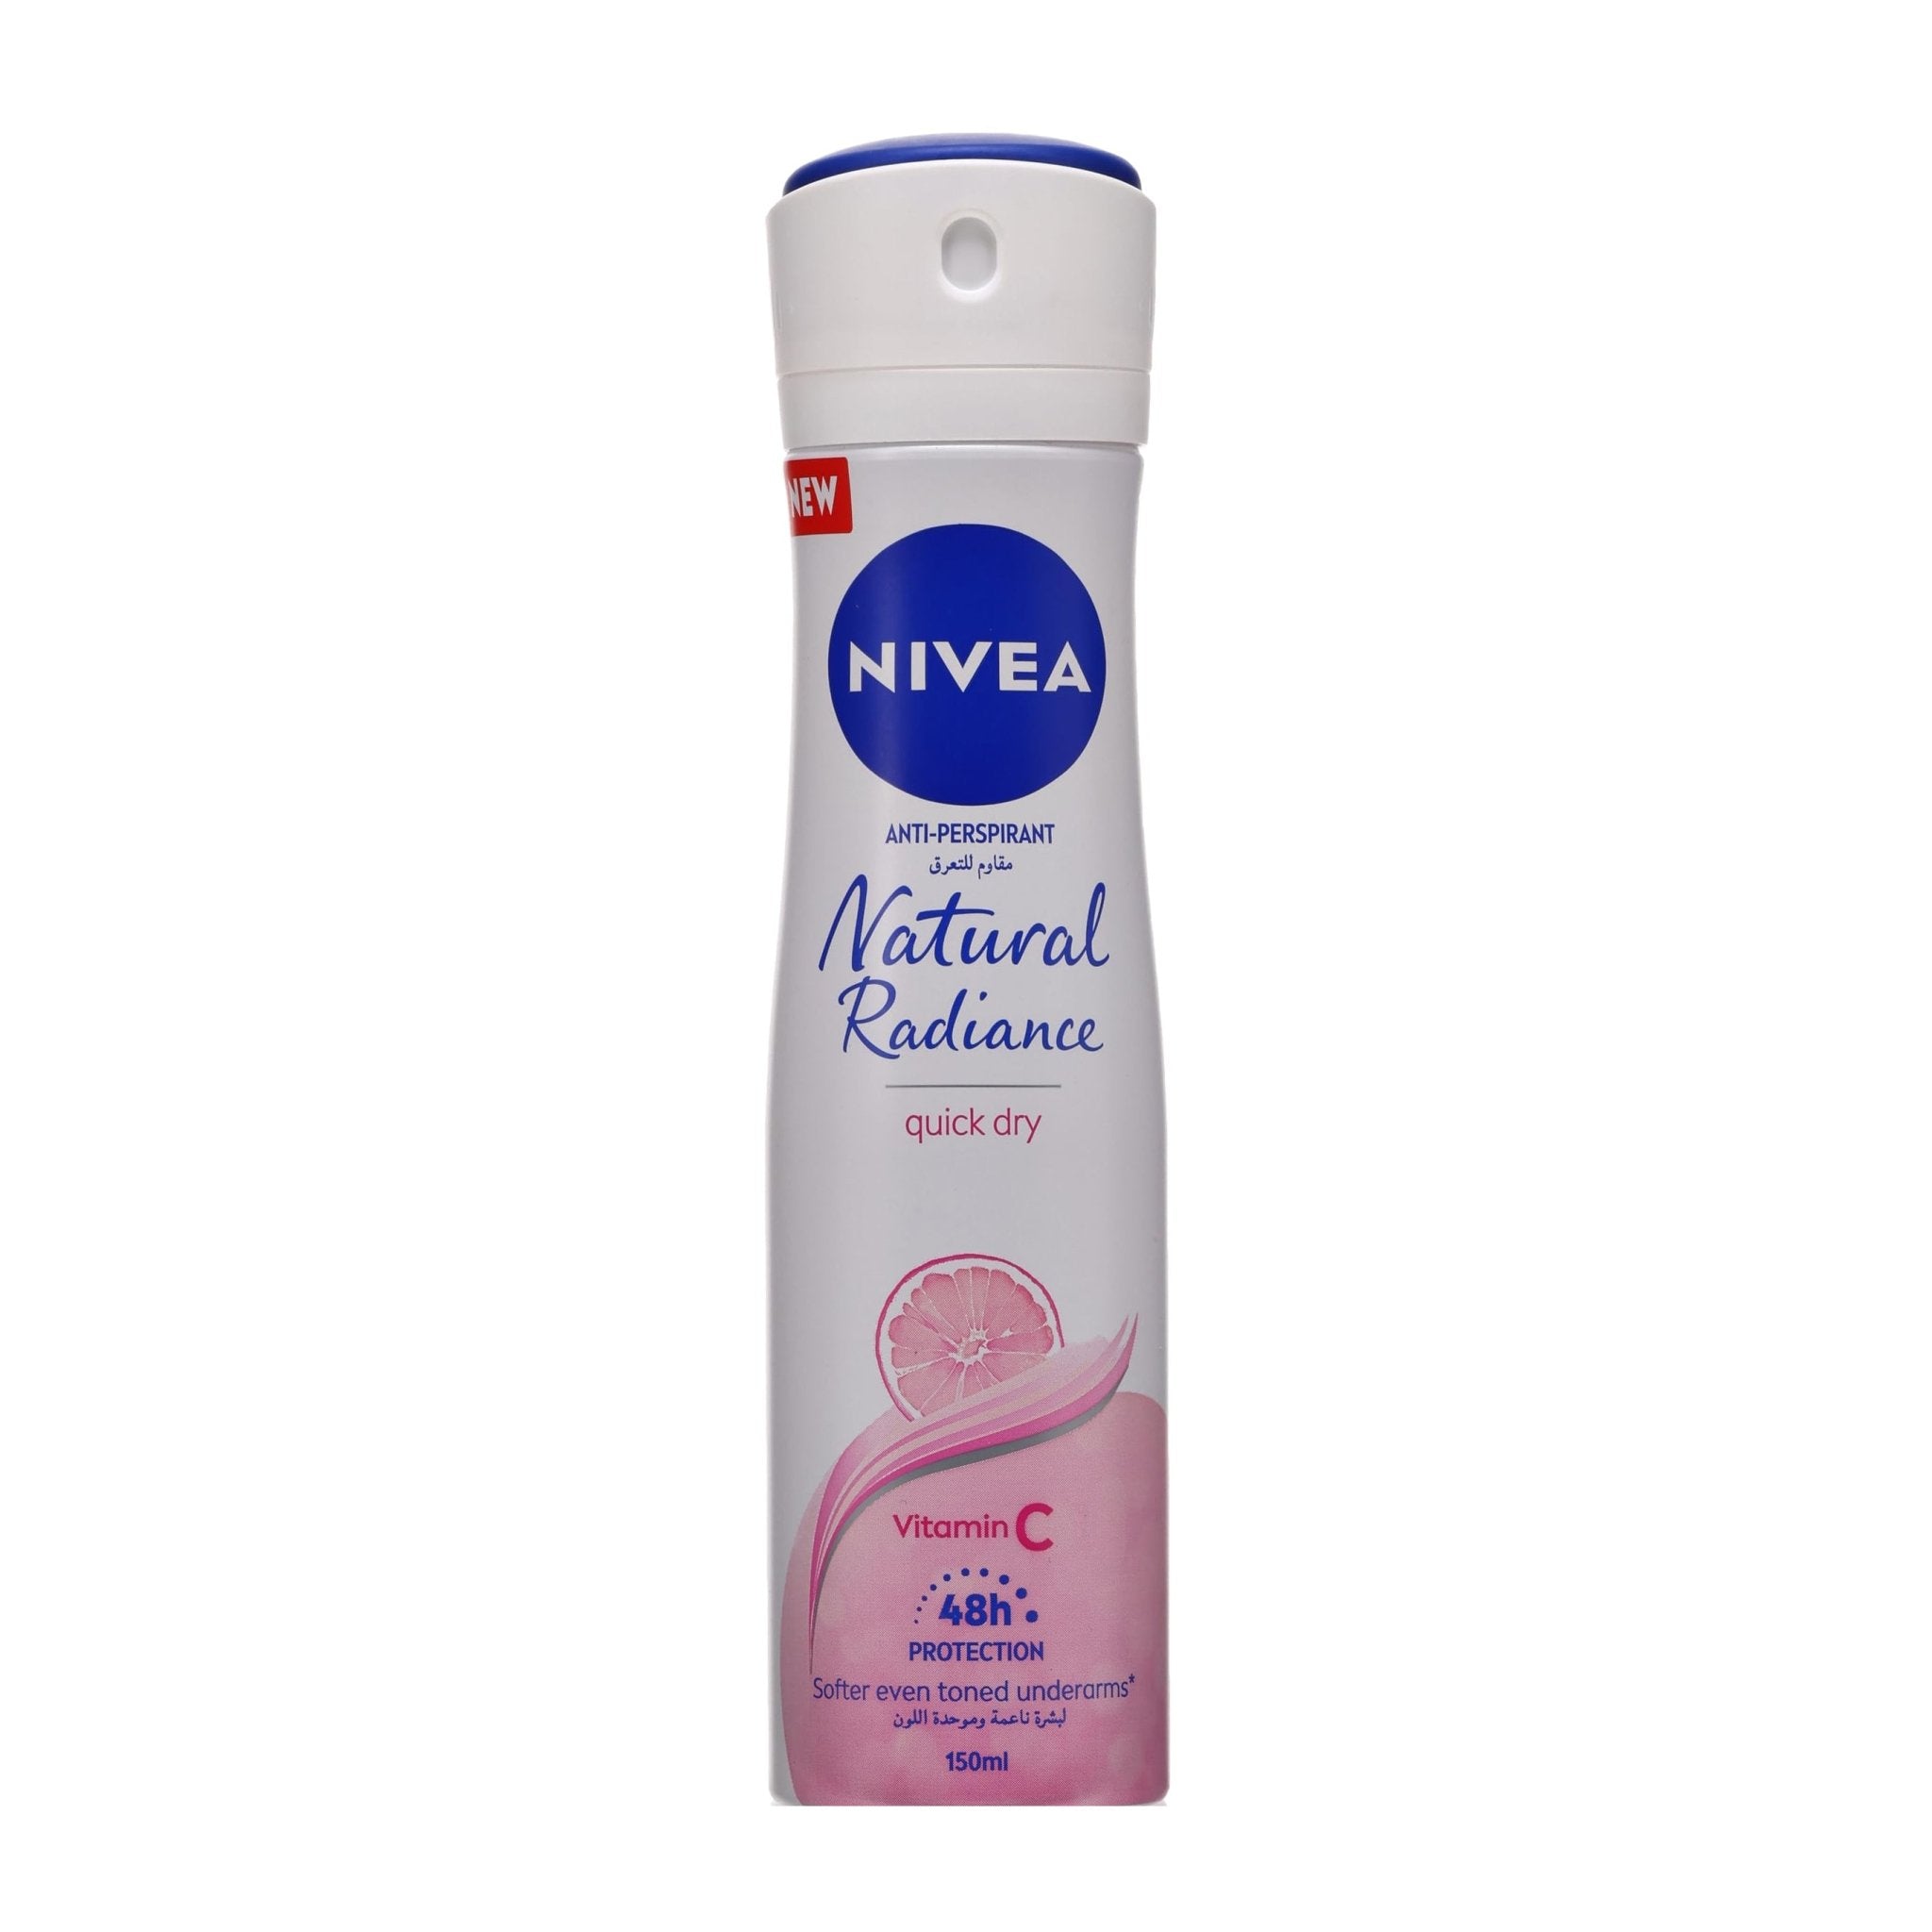 Nivea Natural Fairness With Vitamin C Anti-Perspirant Body Spray - 150ml - Bloom Pharmacy